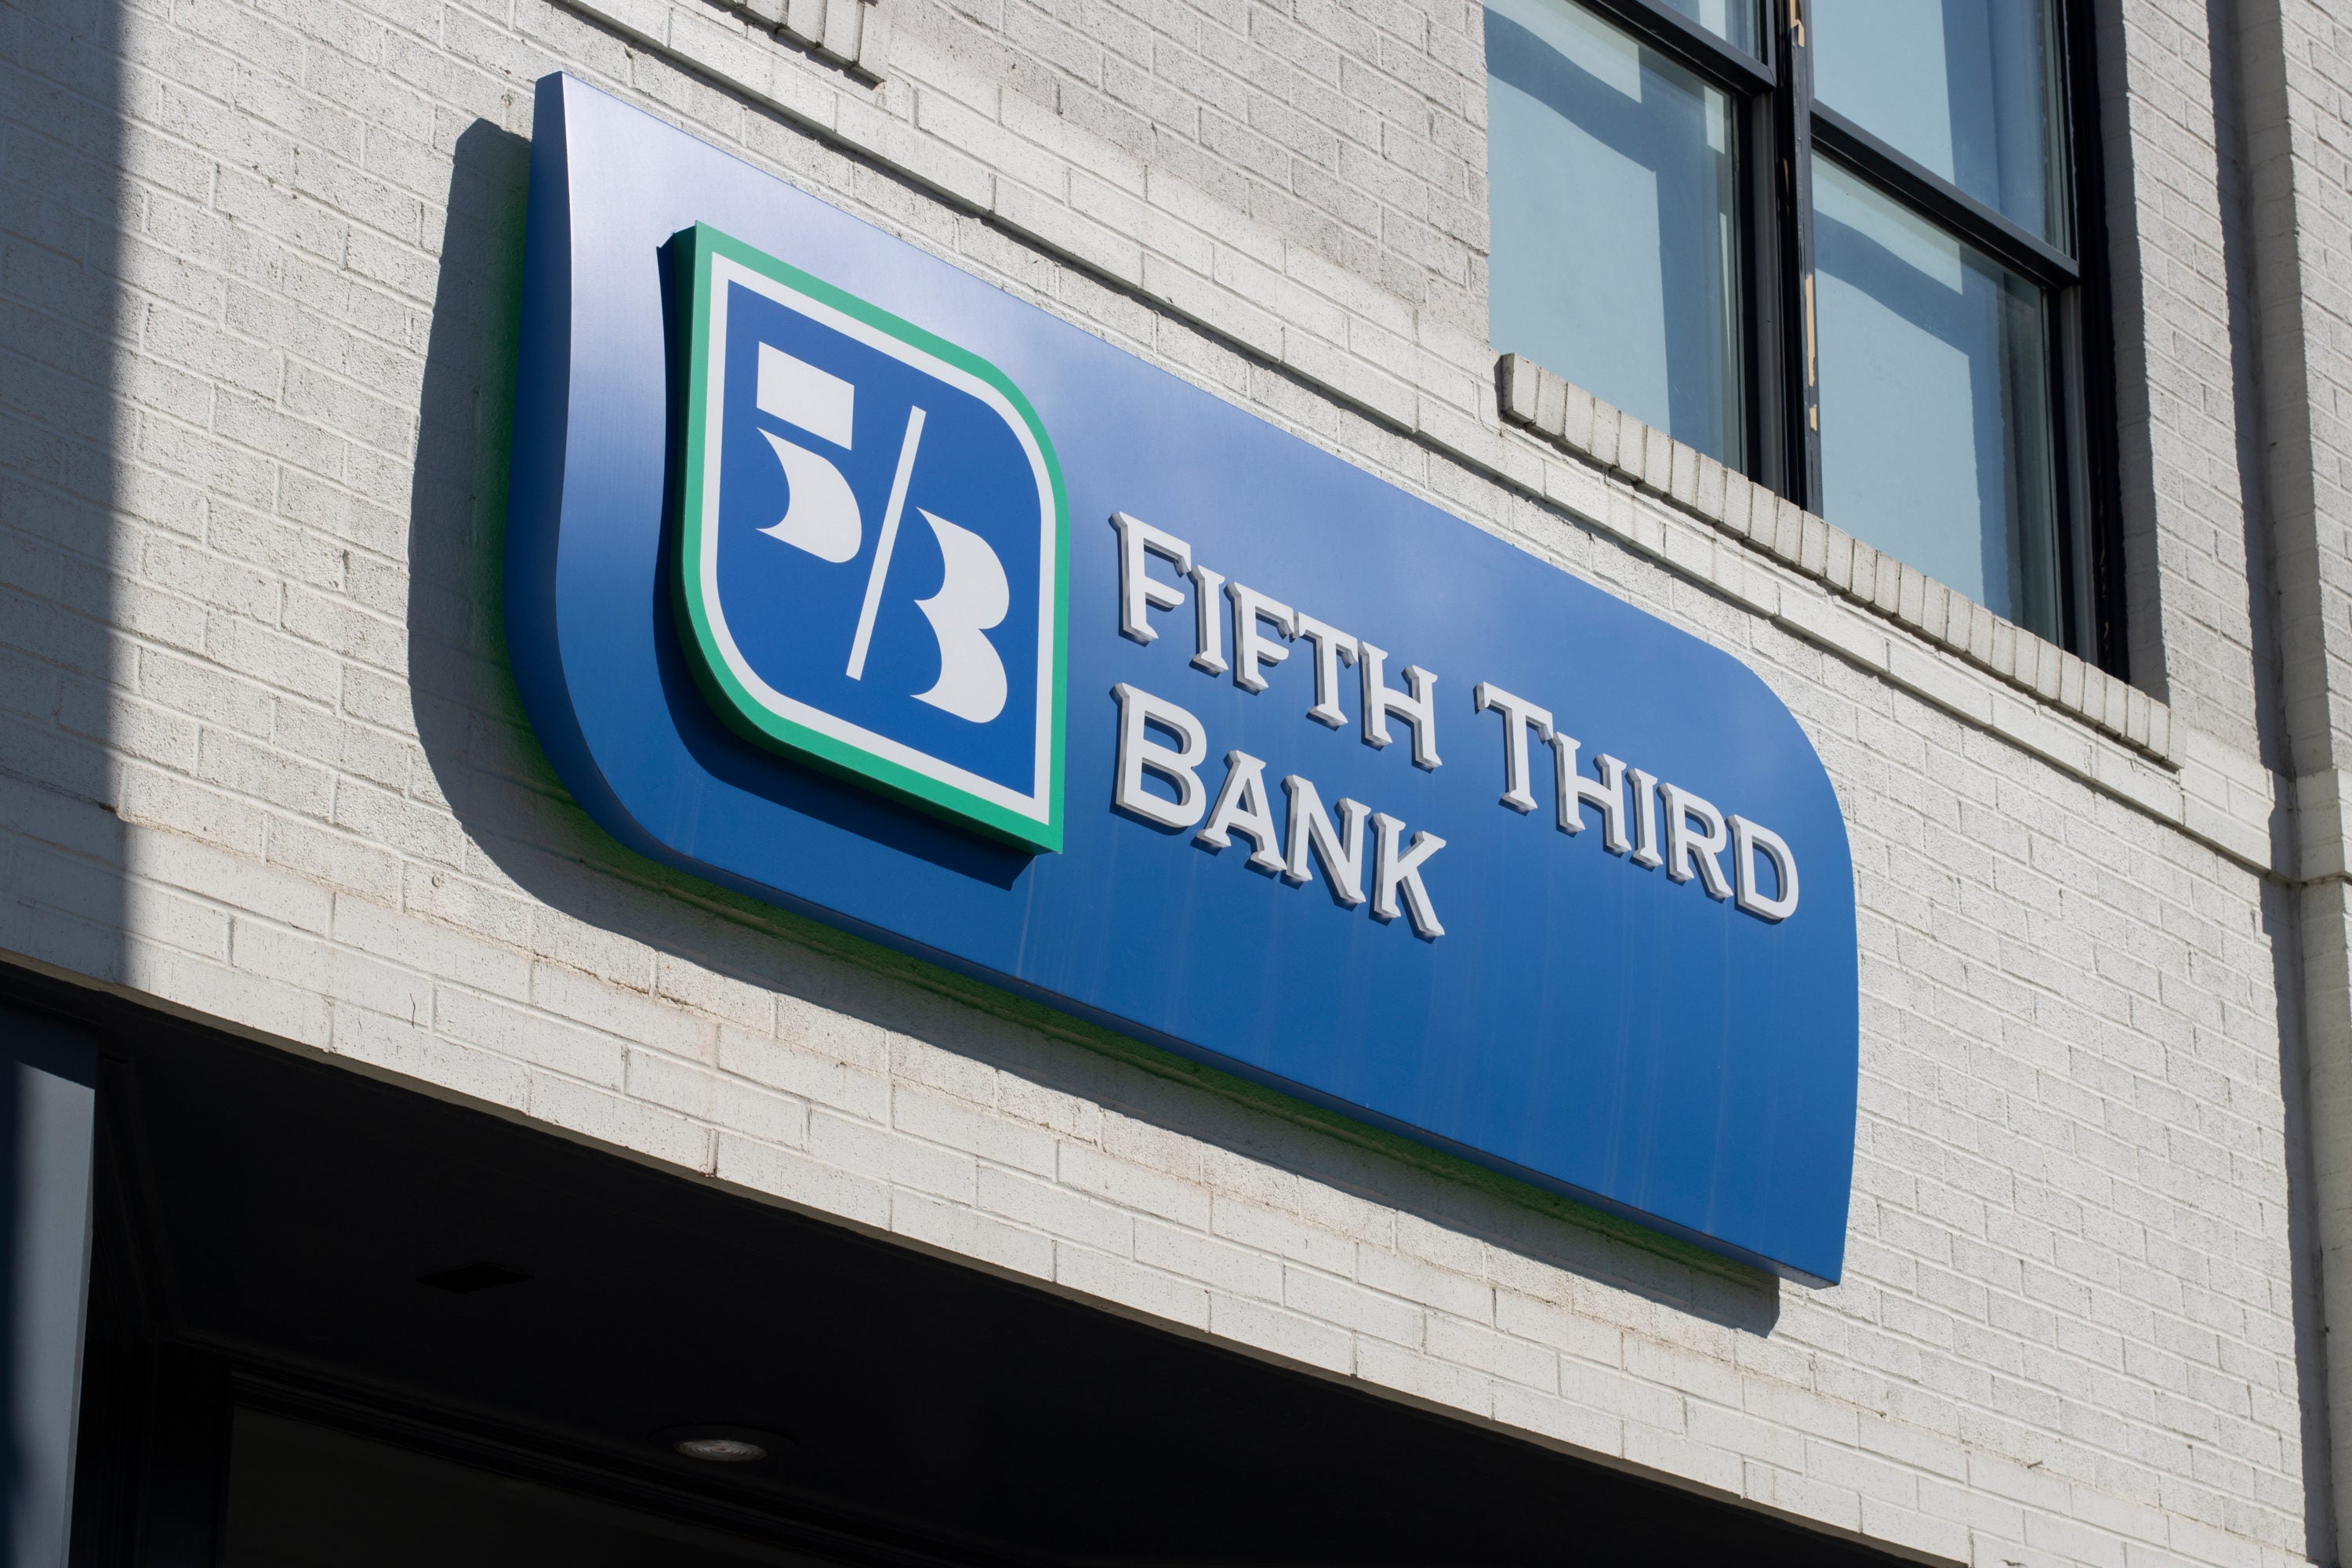 Fifth Third Bank branch